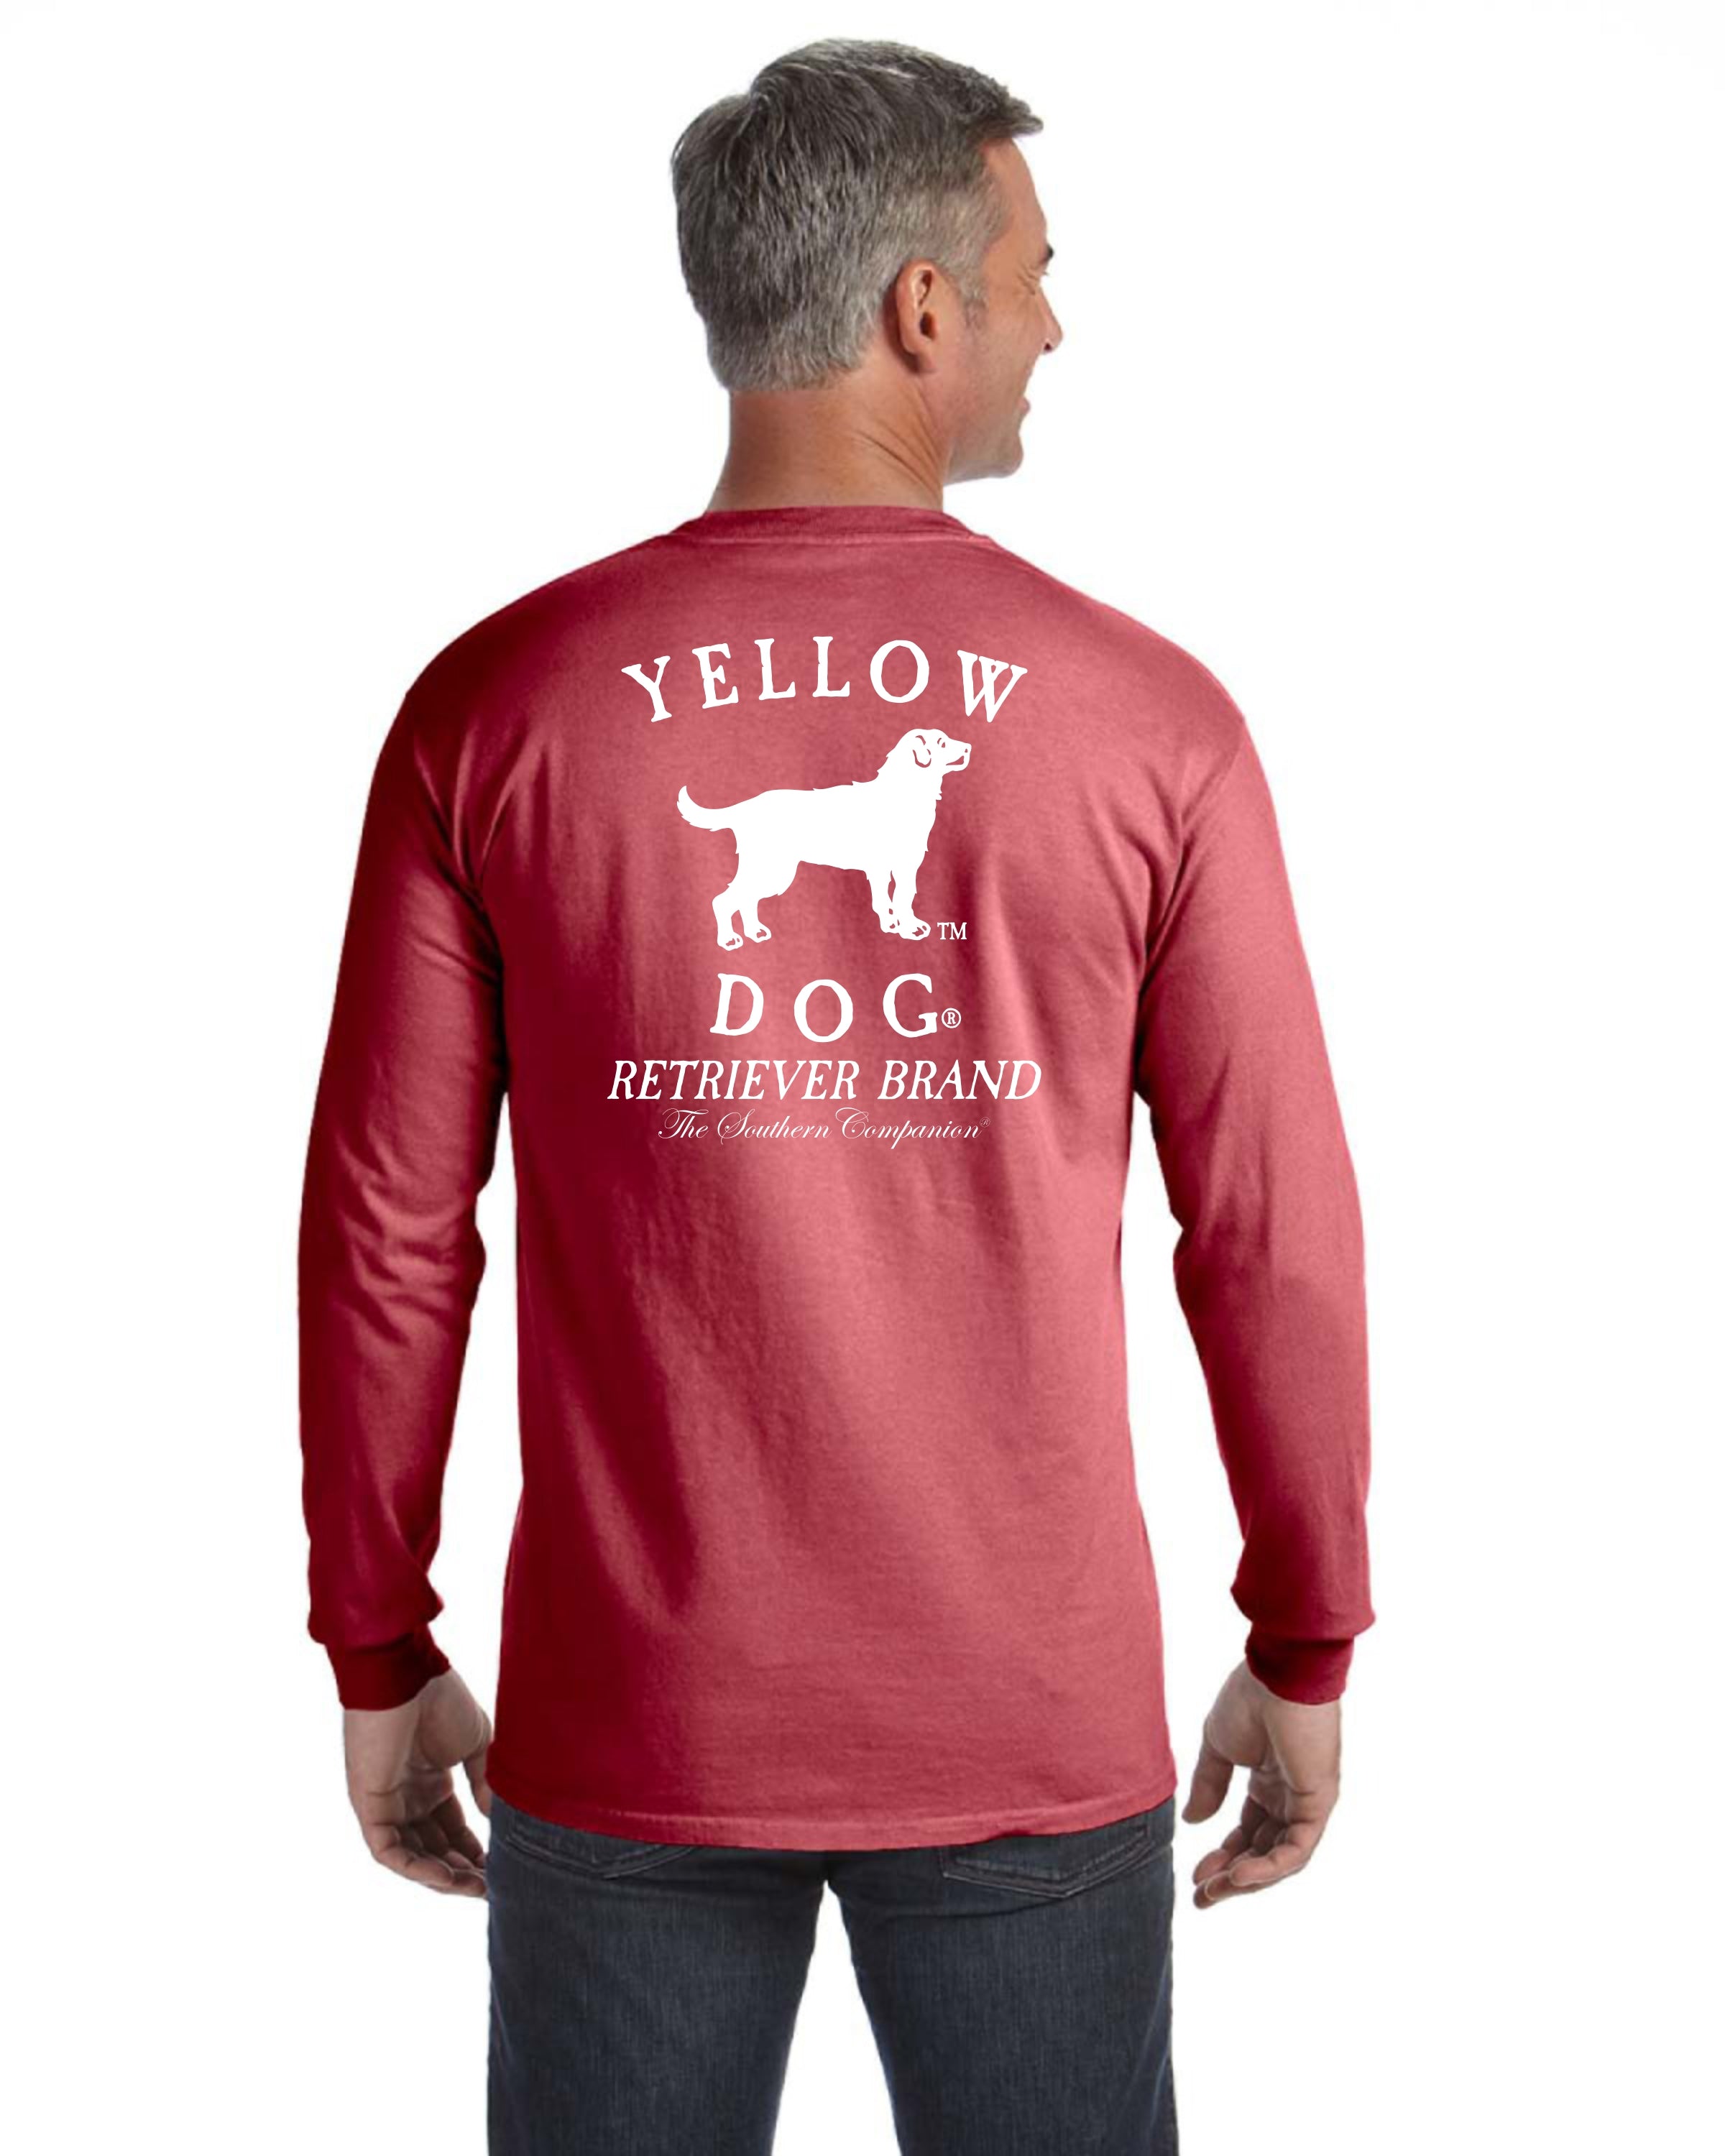 Yellow Dog Retriever Brand Southern Companion Long Sleeve T-shirt